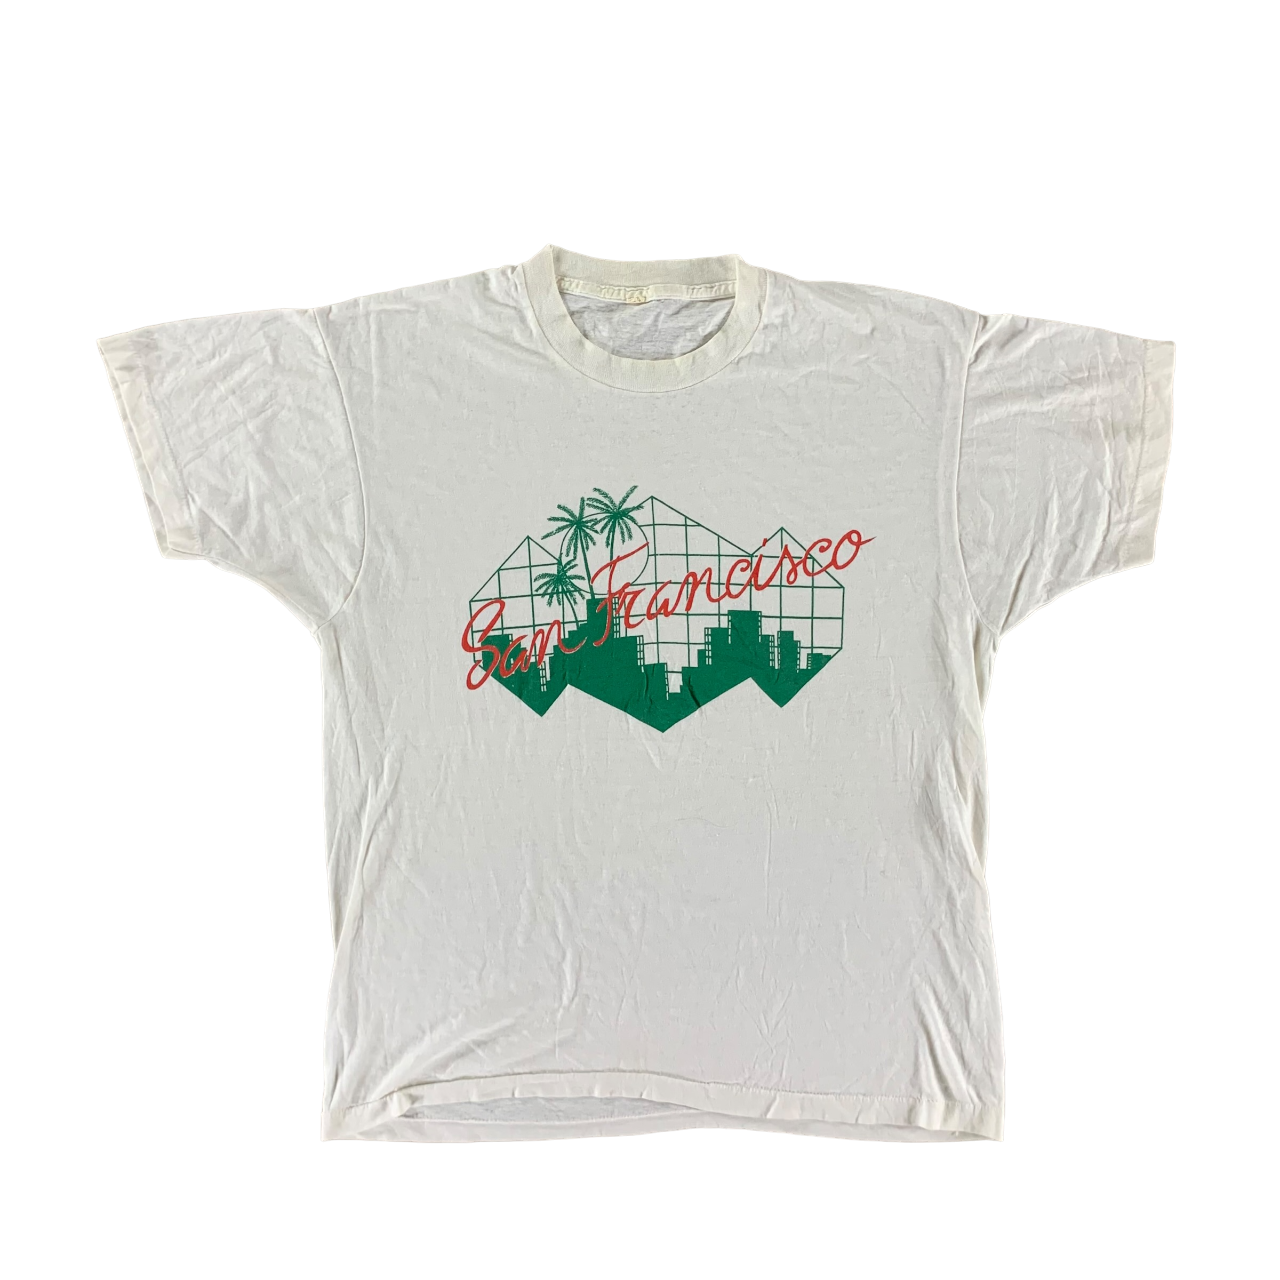 Vintage 1980s Florida T-shirt size XL